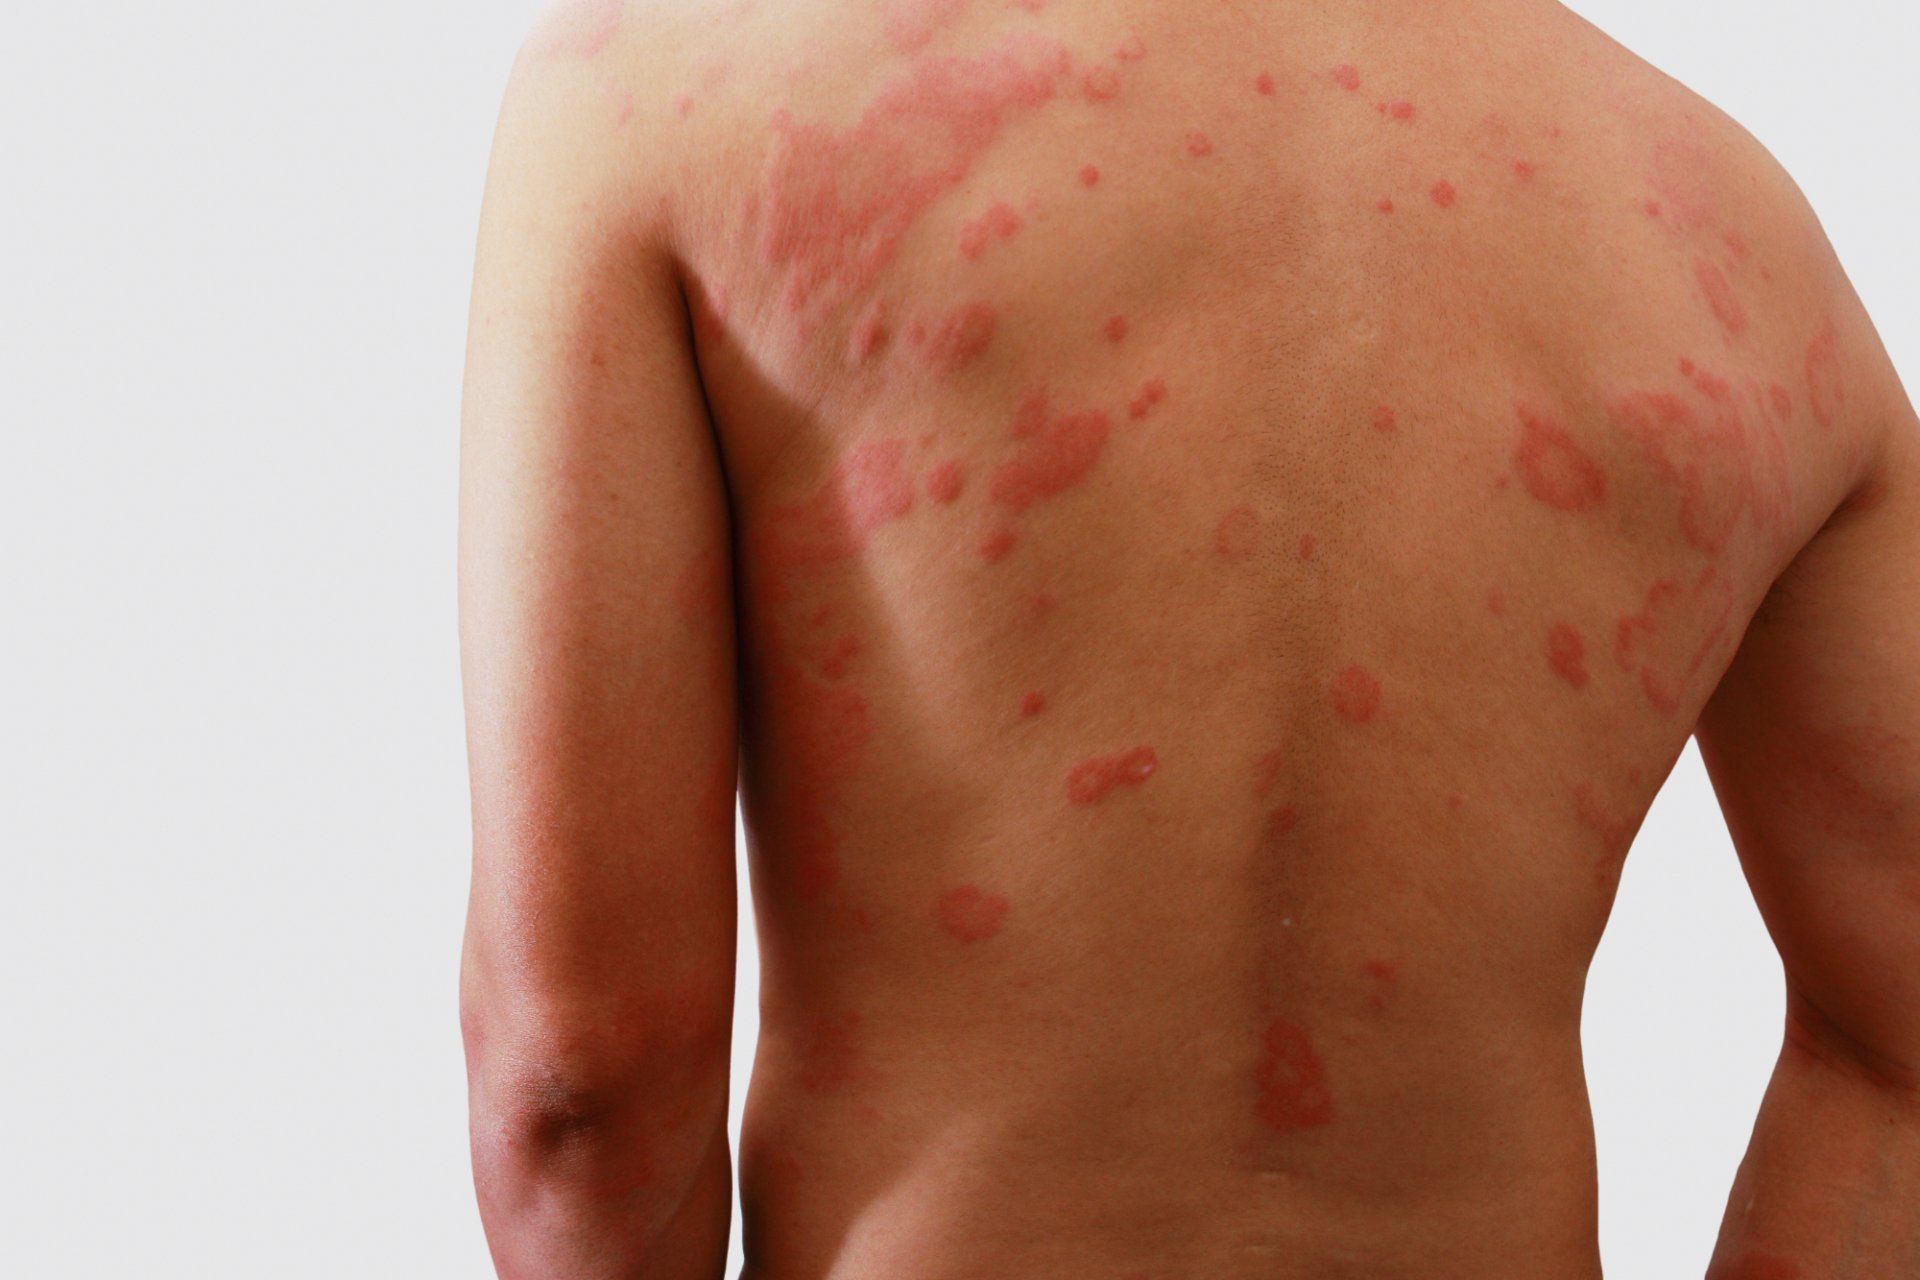 large rash on man's back